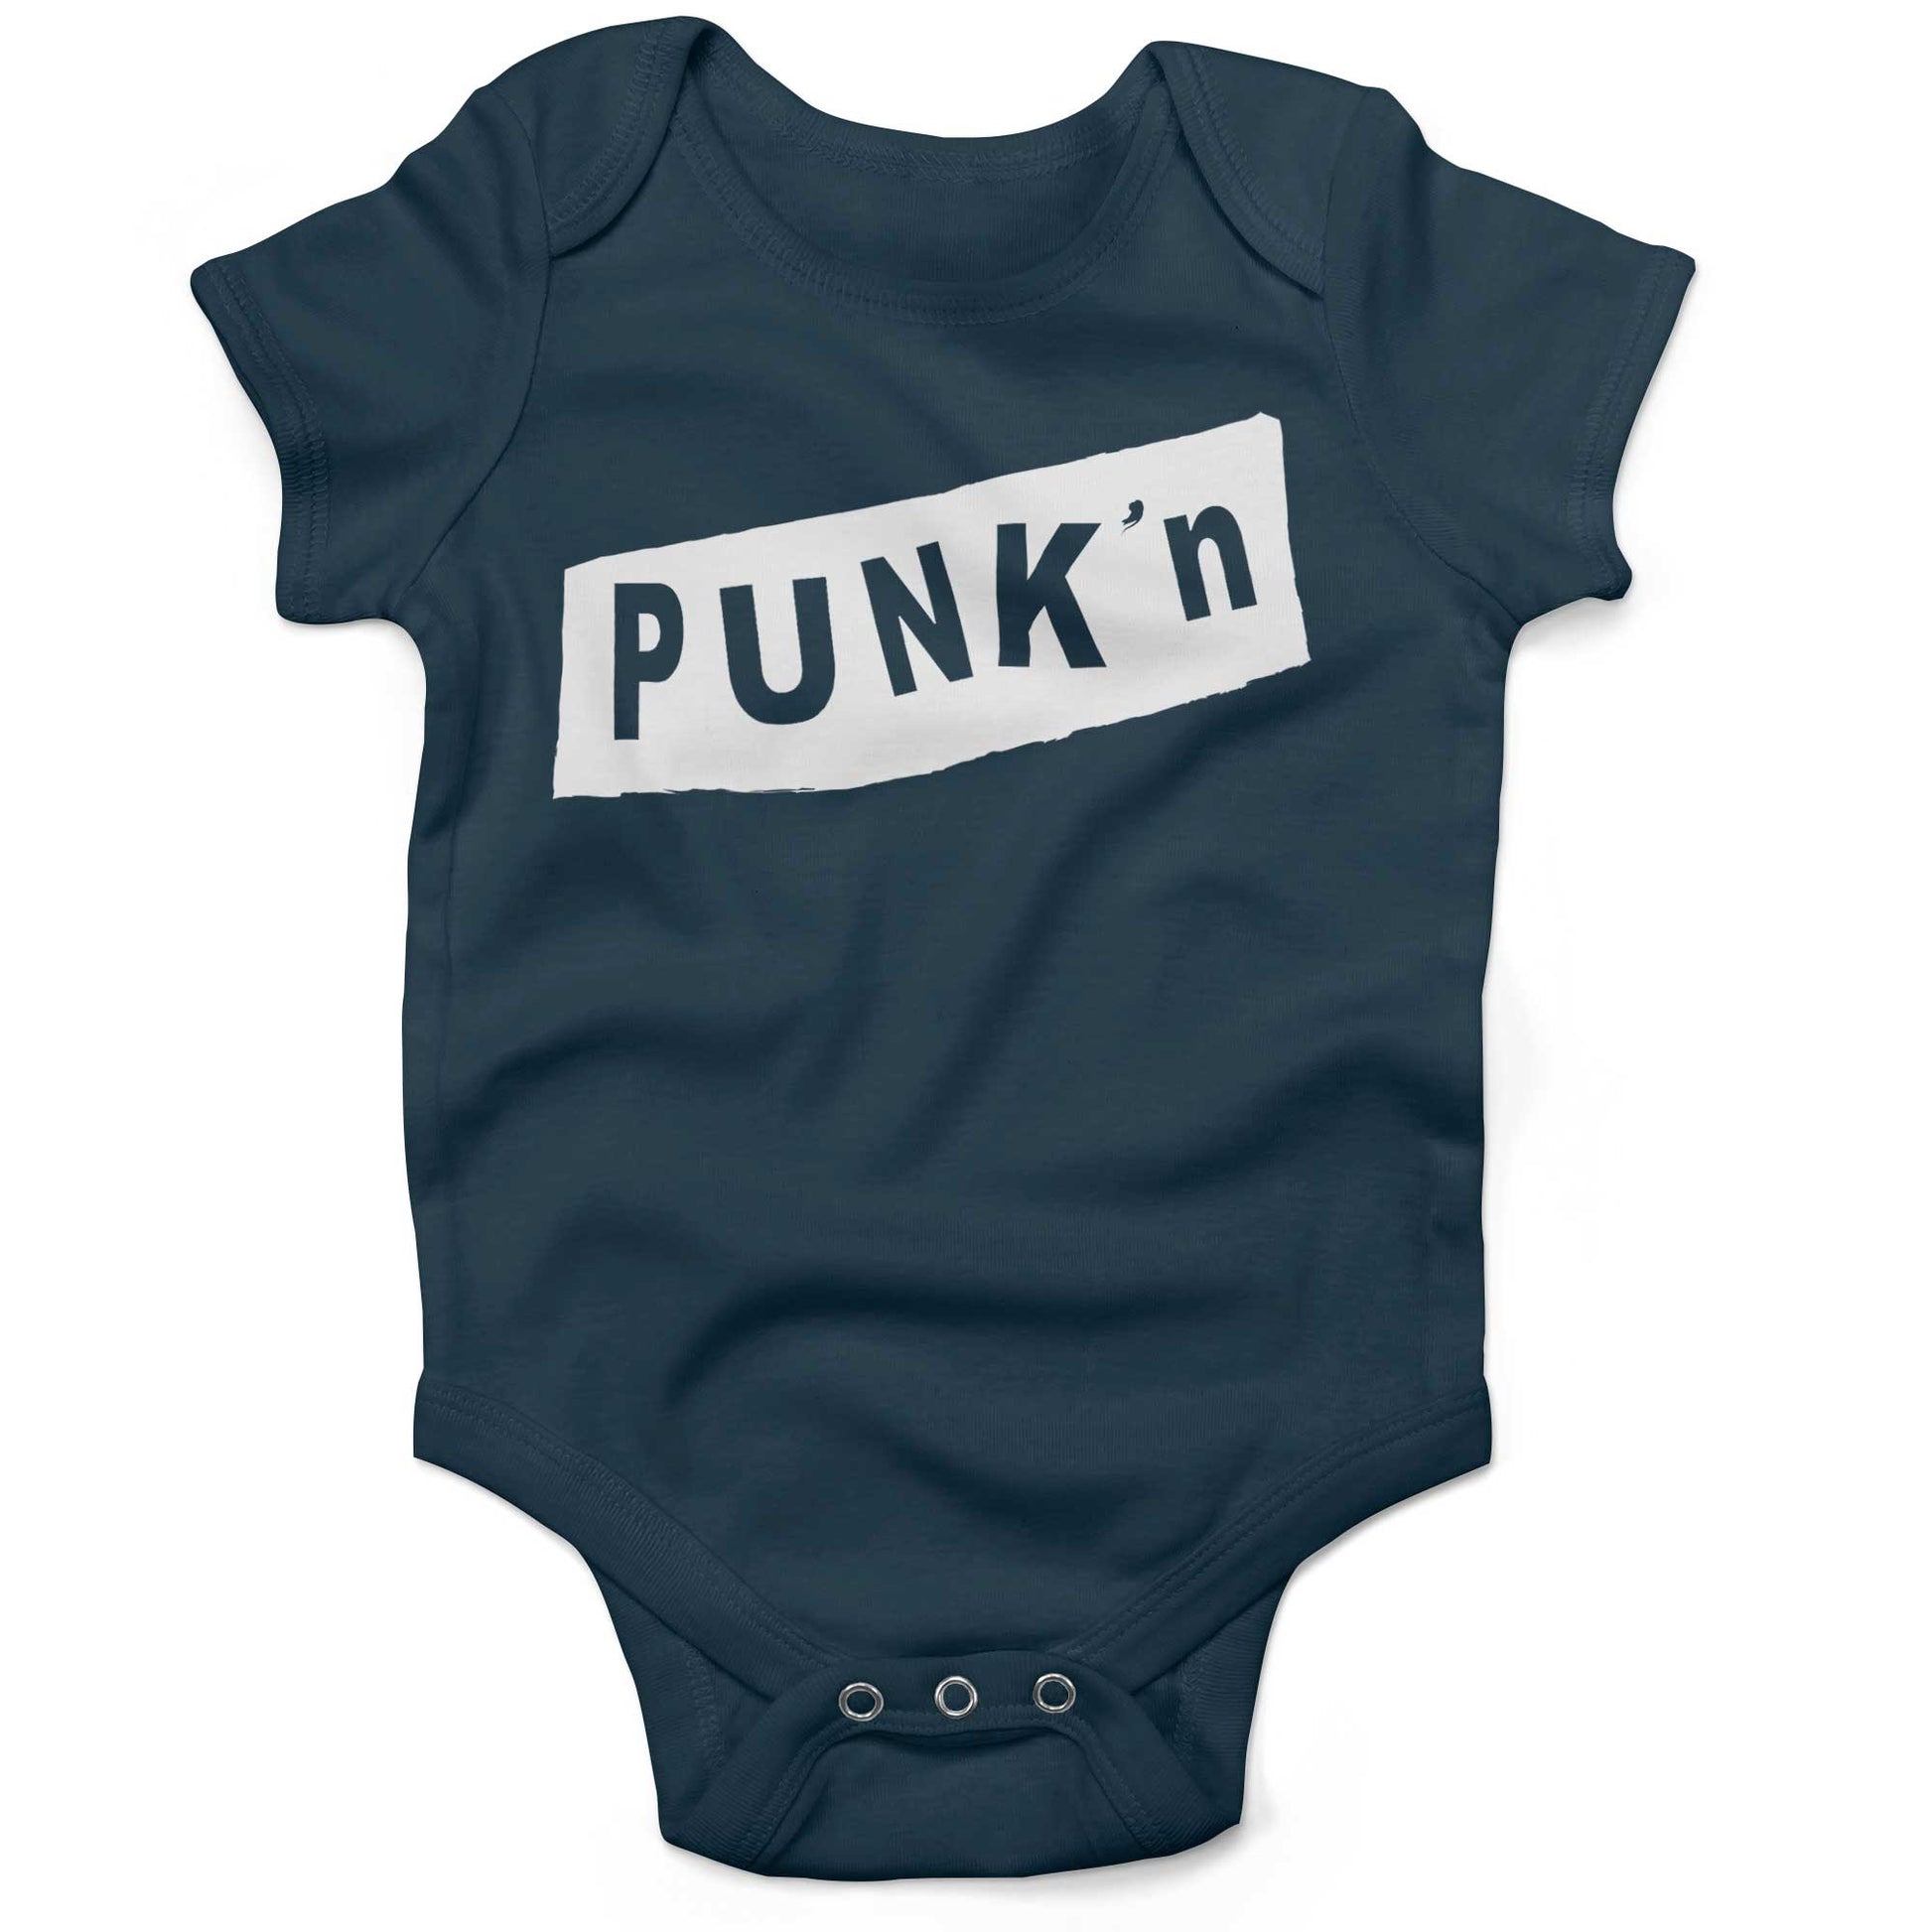 Pumpkin Punk'n Infant Bodysuit or Raglan Tee-Organic Pacific Blue-3-6 months